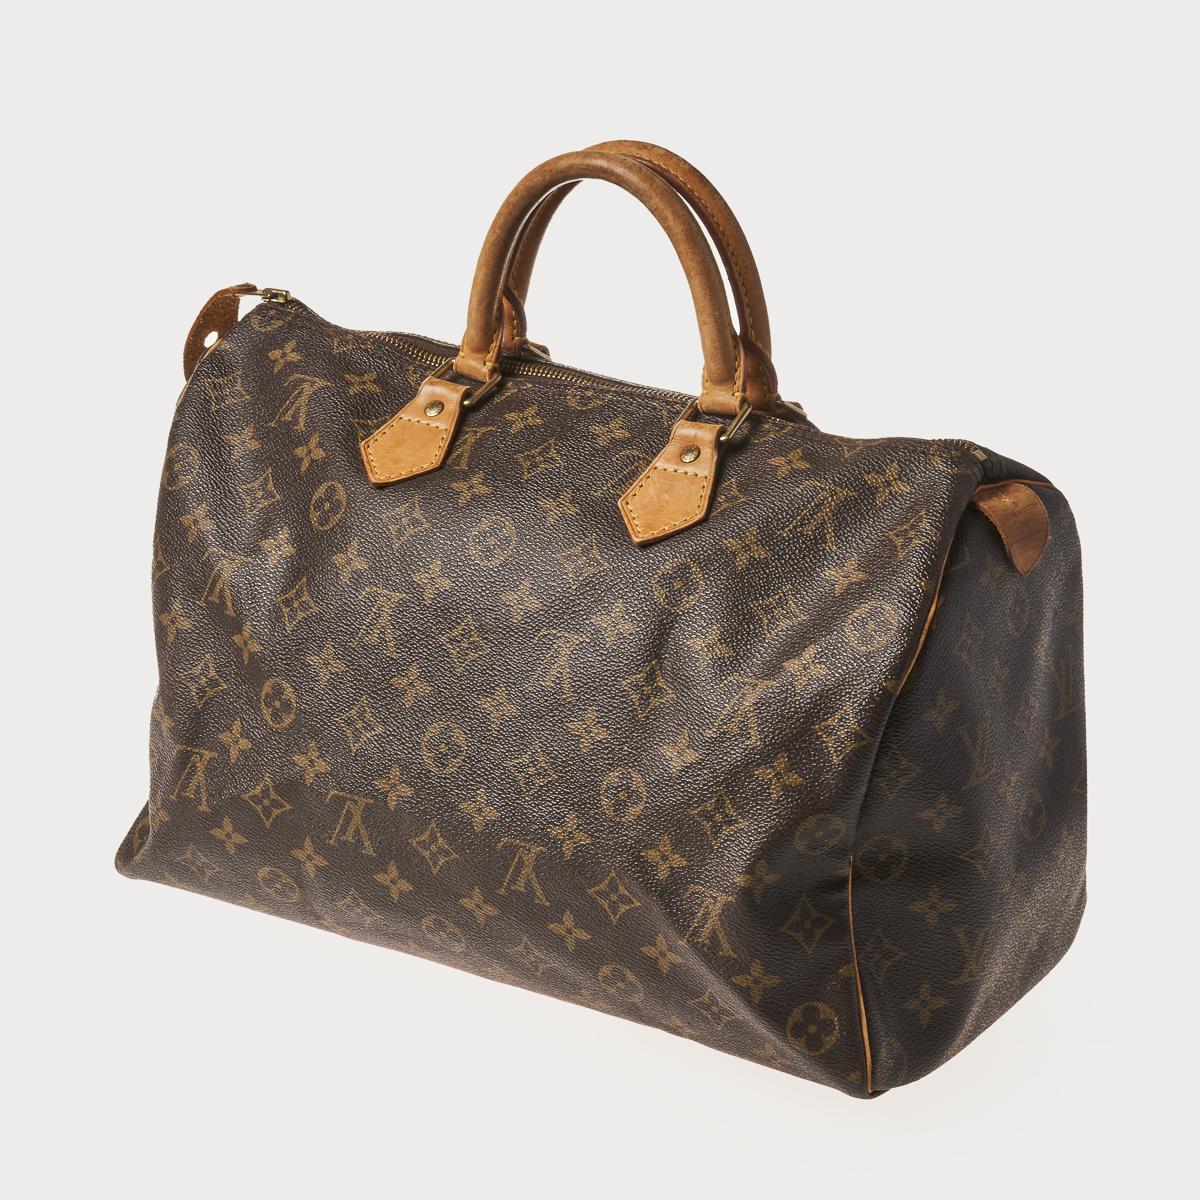 Sold at Auction: LOUIS VUITTON Handbag SPEEDY 35.